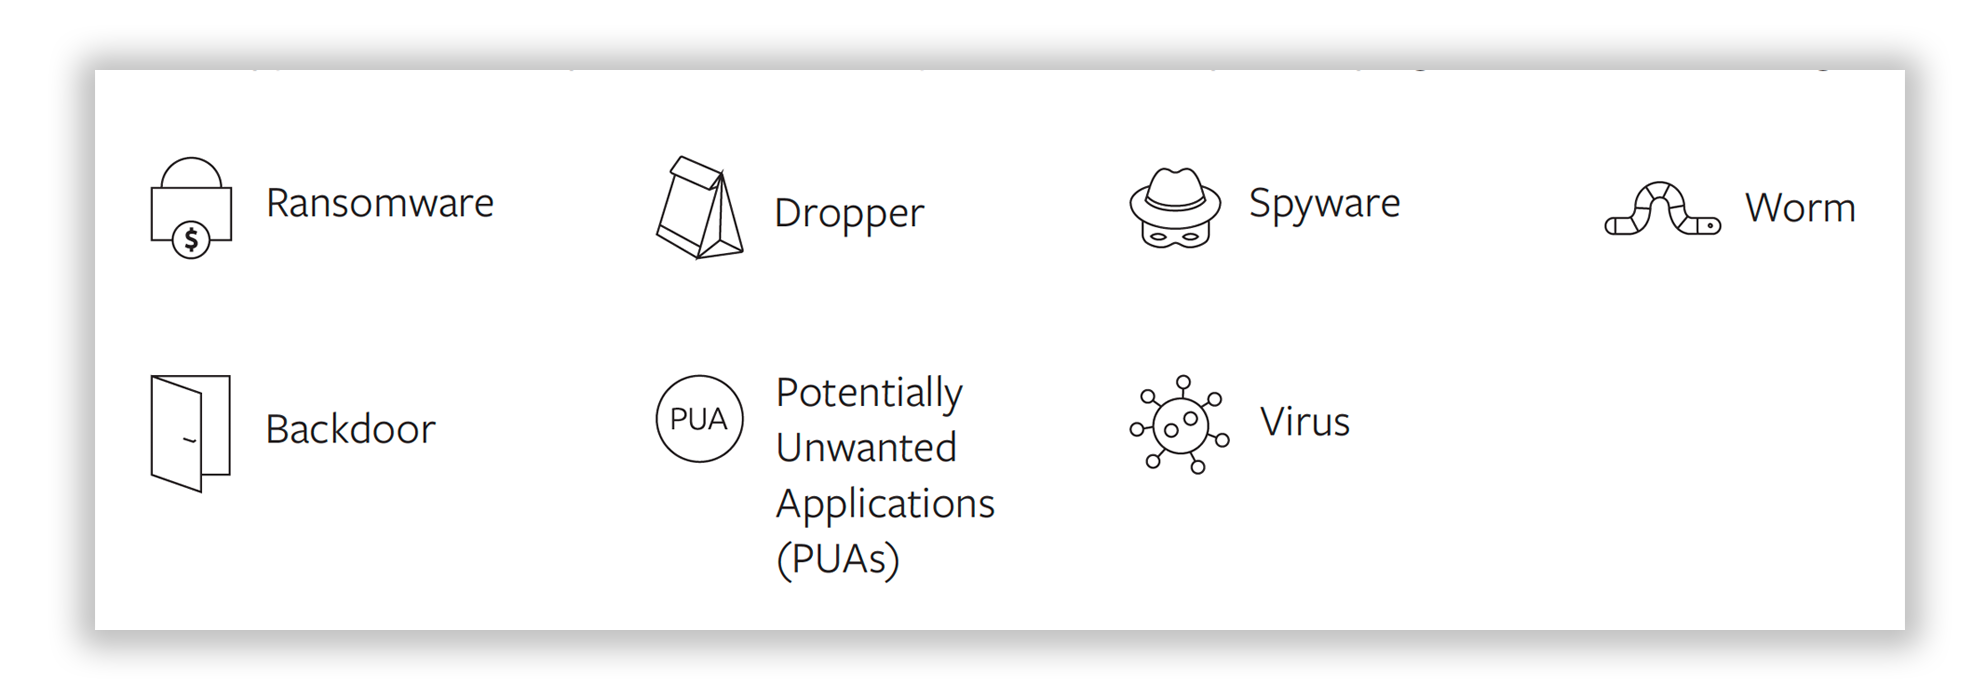 Classification of Malware Threats - 7 Malware Family Types